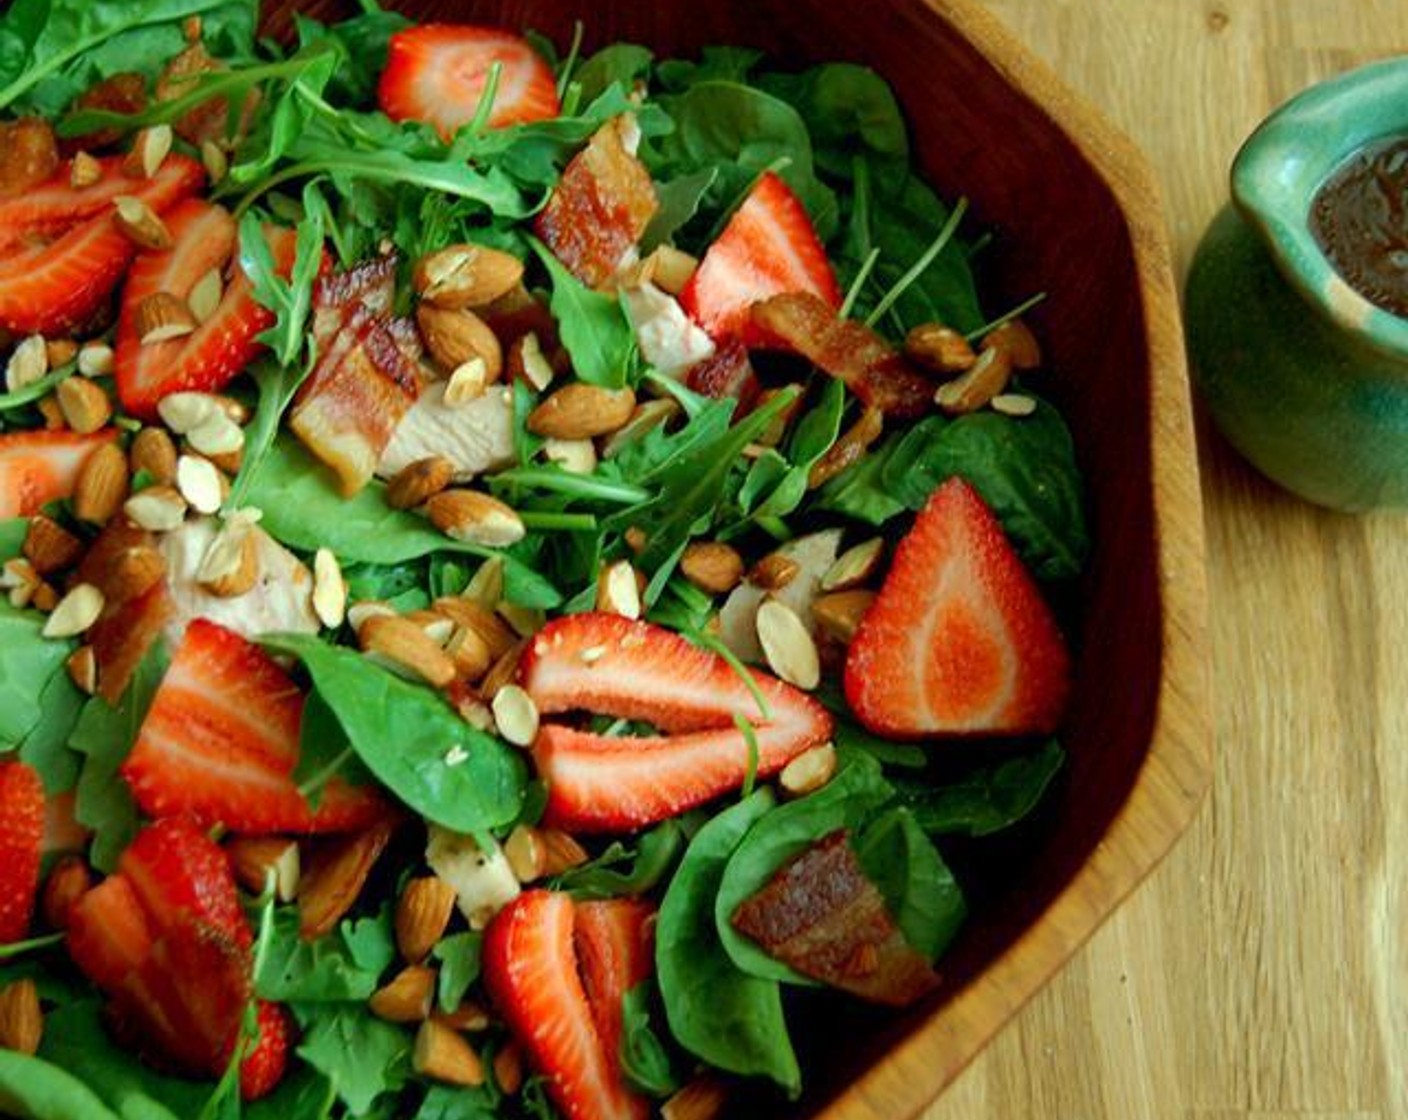 Strawberry Balsamic Chicken Salad